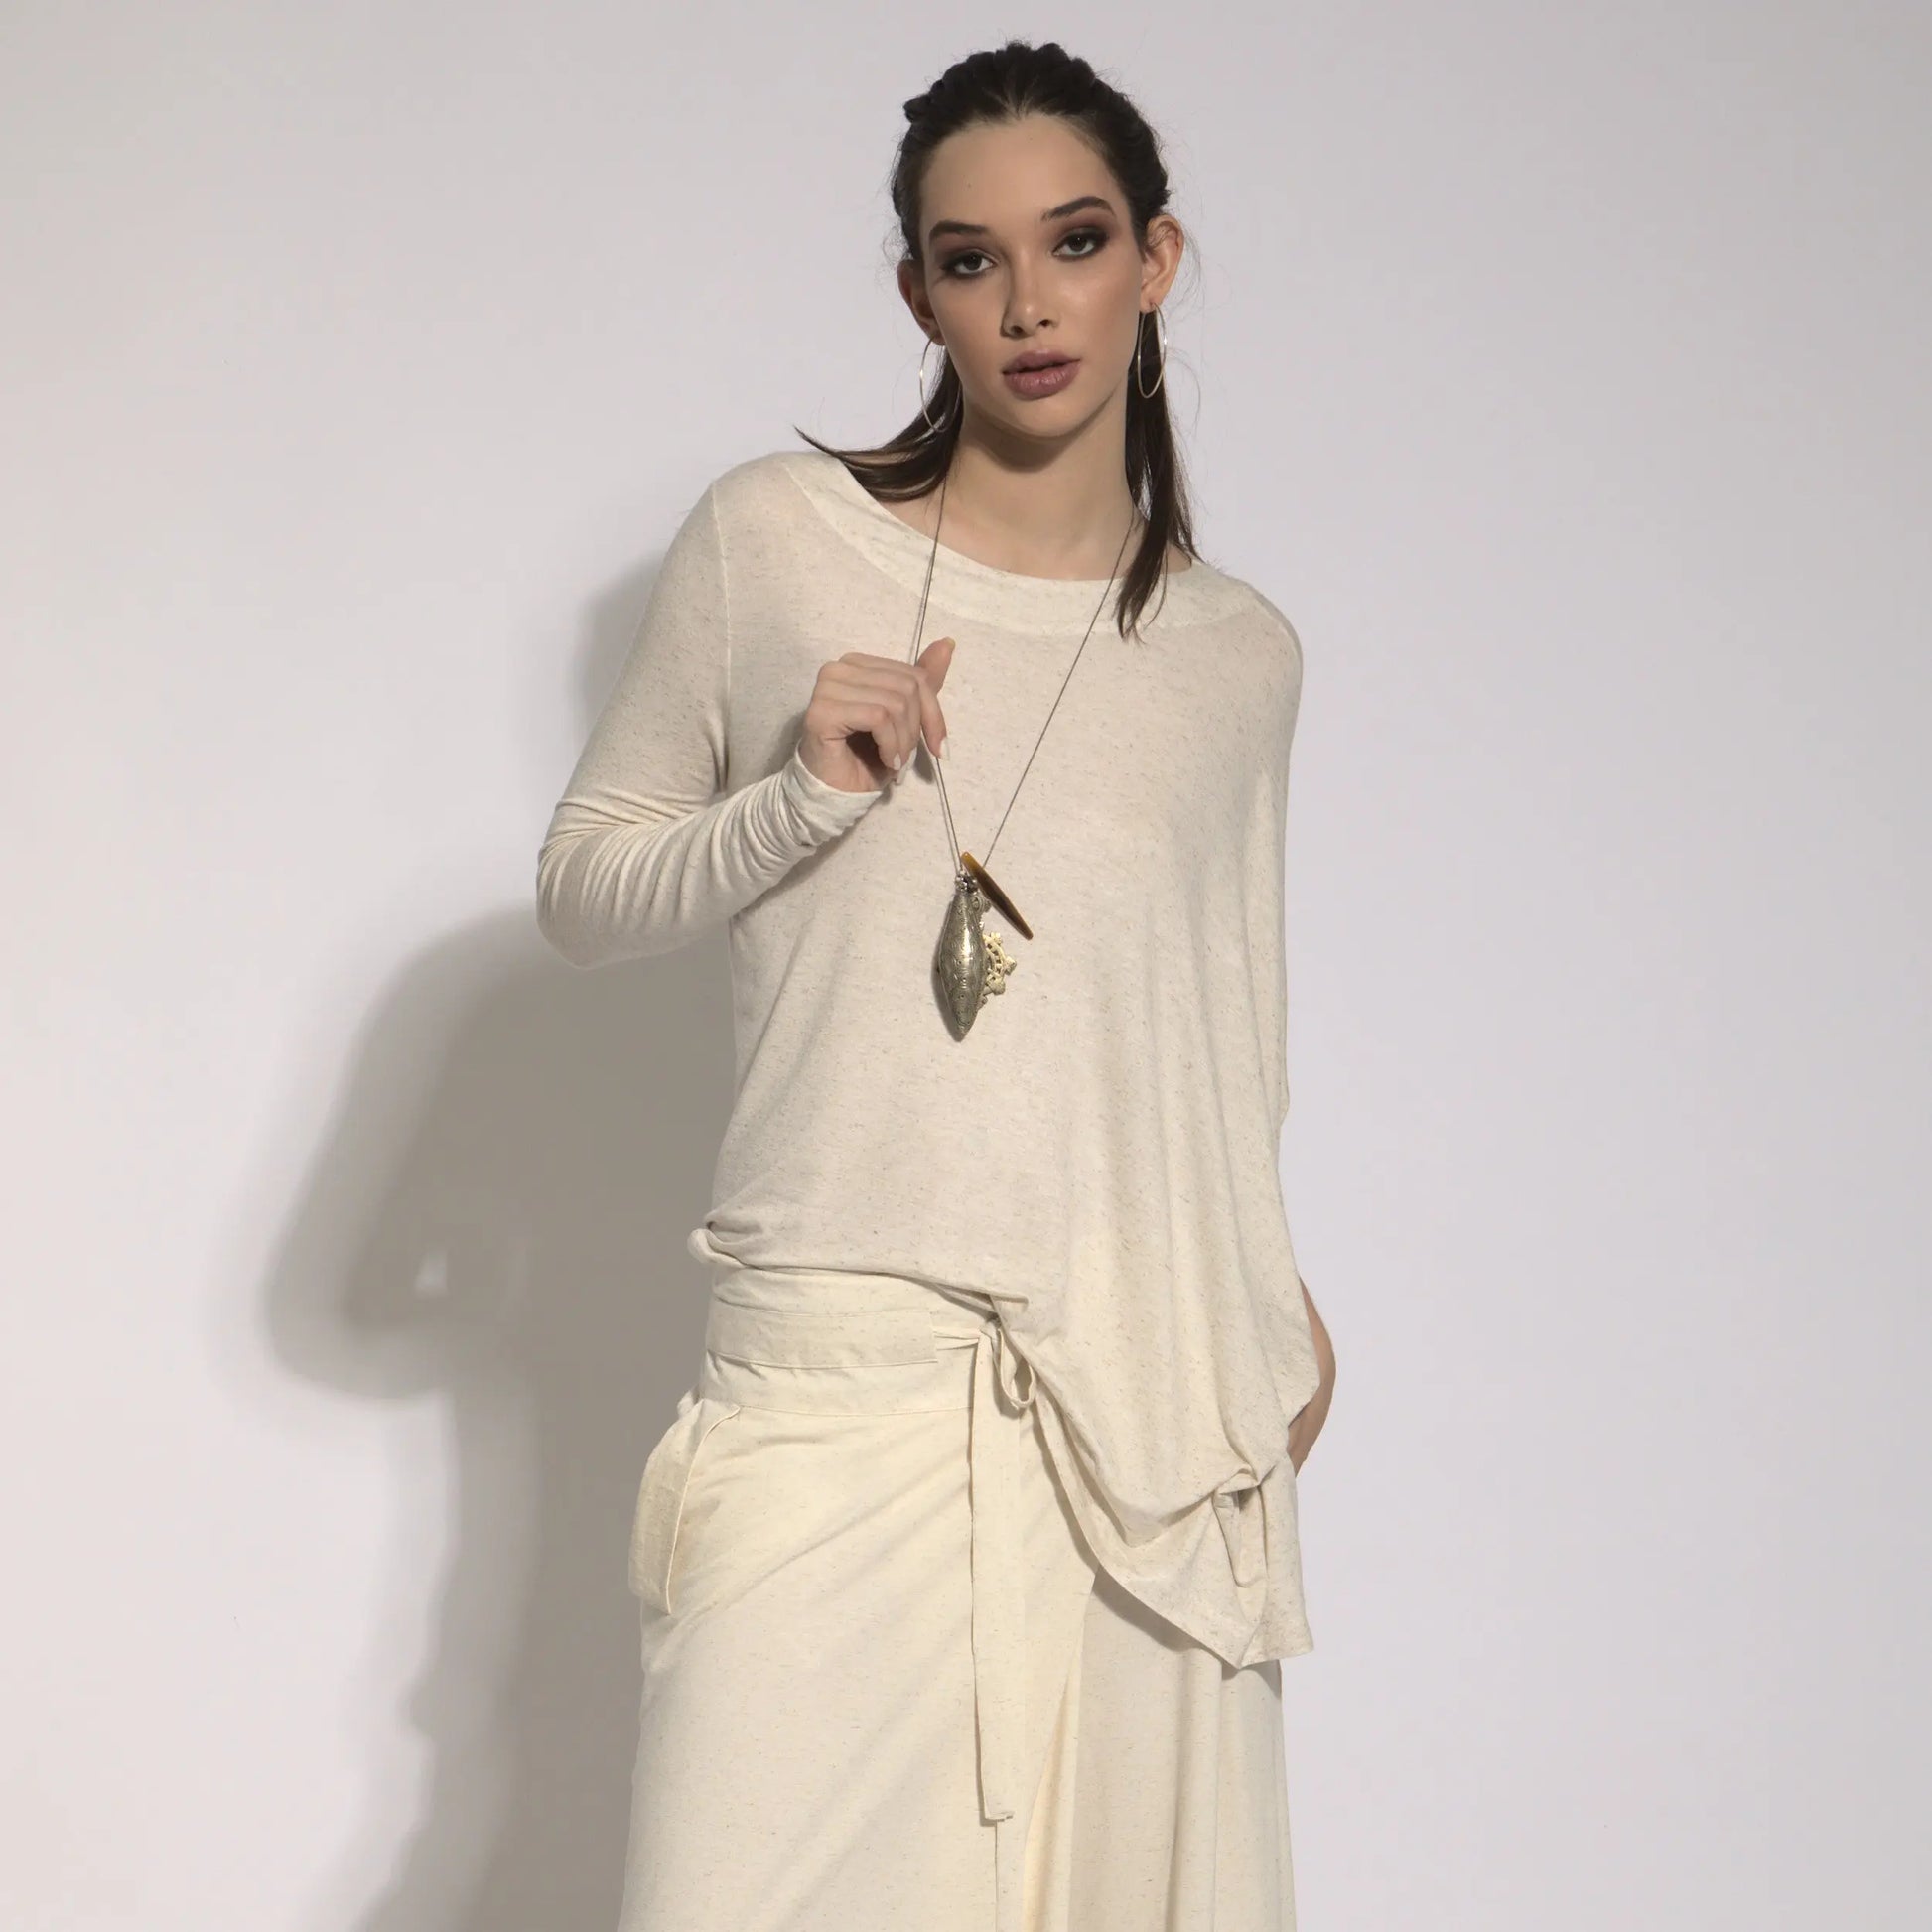 Naomi - Blusa assimétrica em malha minimalista off-white